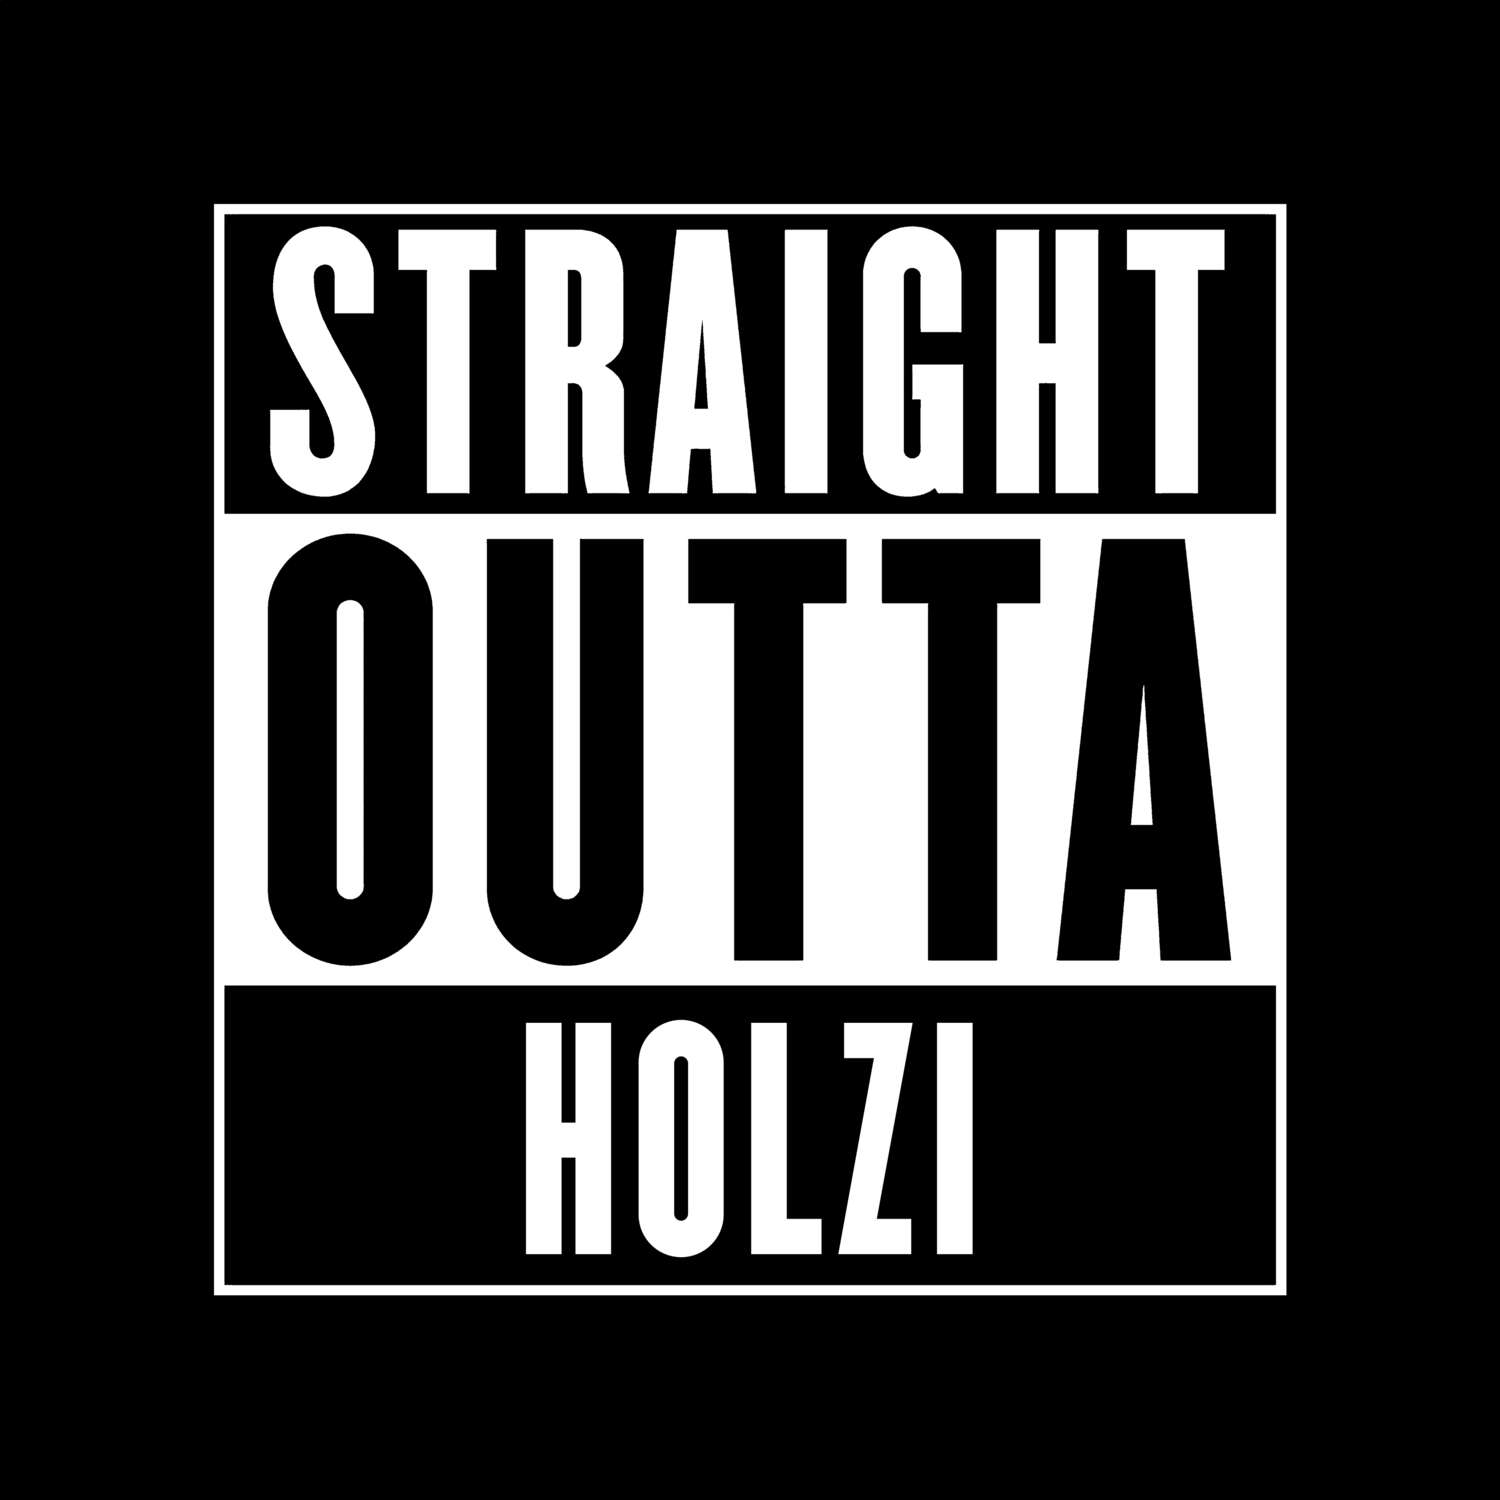 Holzi T-Shirt »Straight Outta«